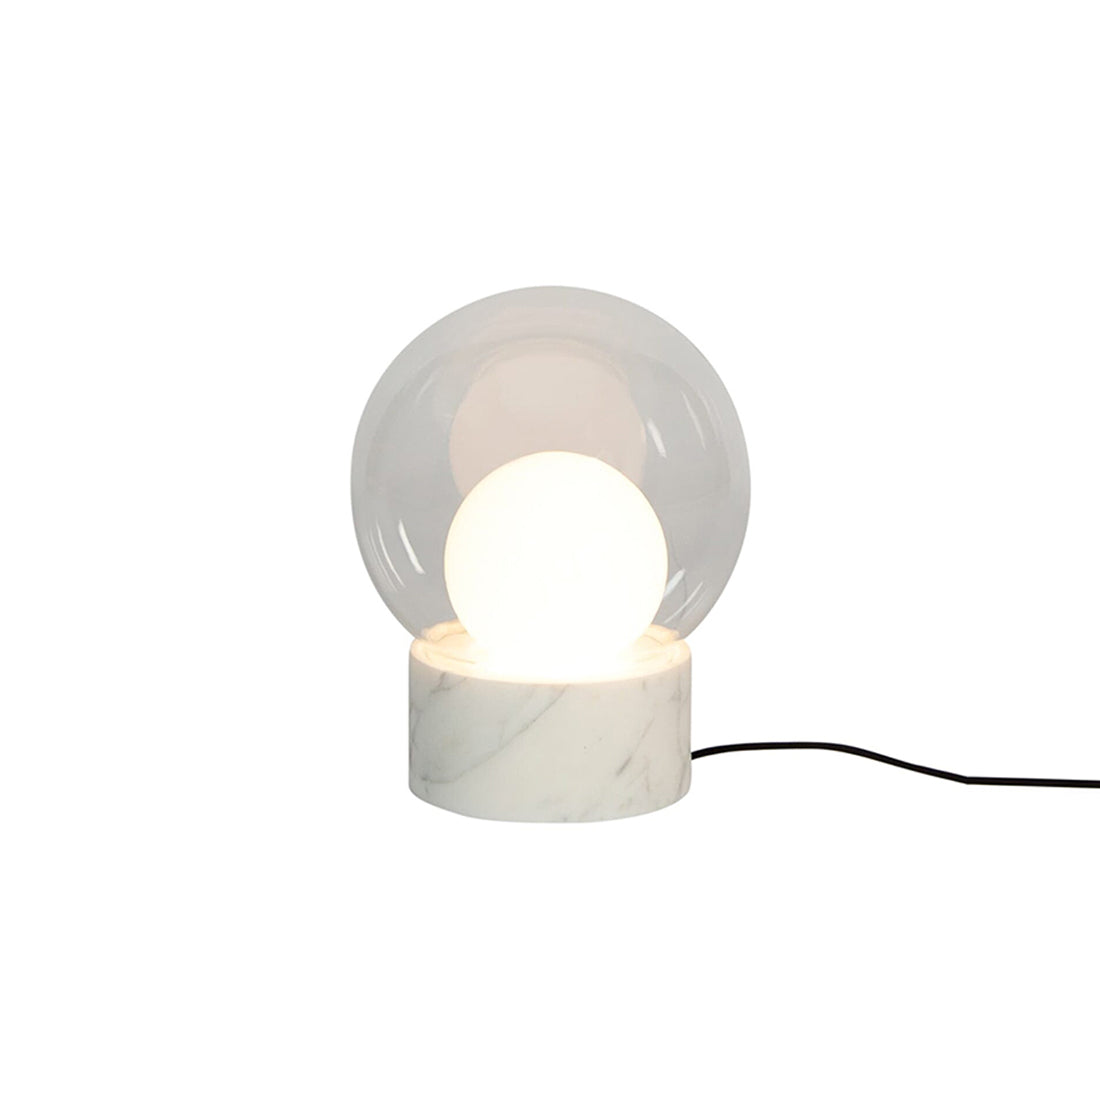 Boule Table Lamp: Transparent + Opal White + Carrara White Stone